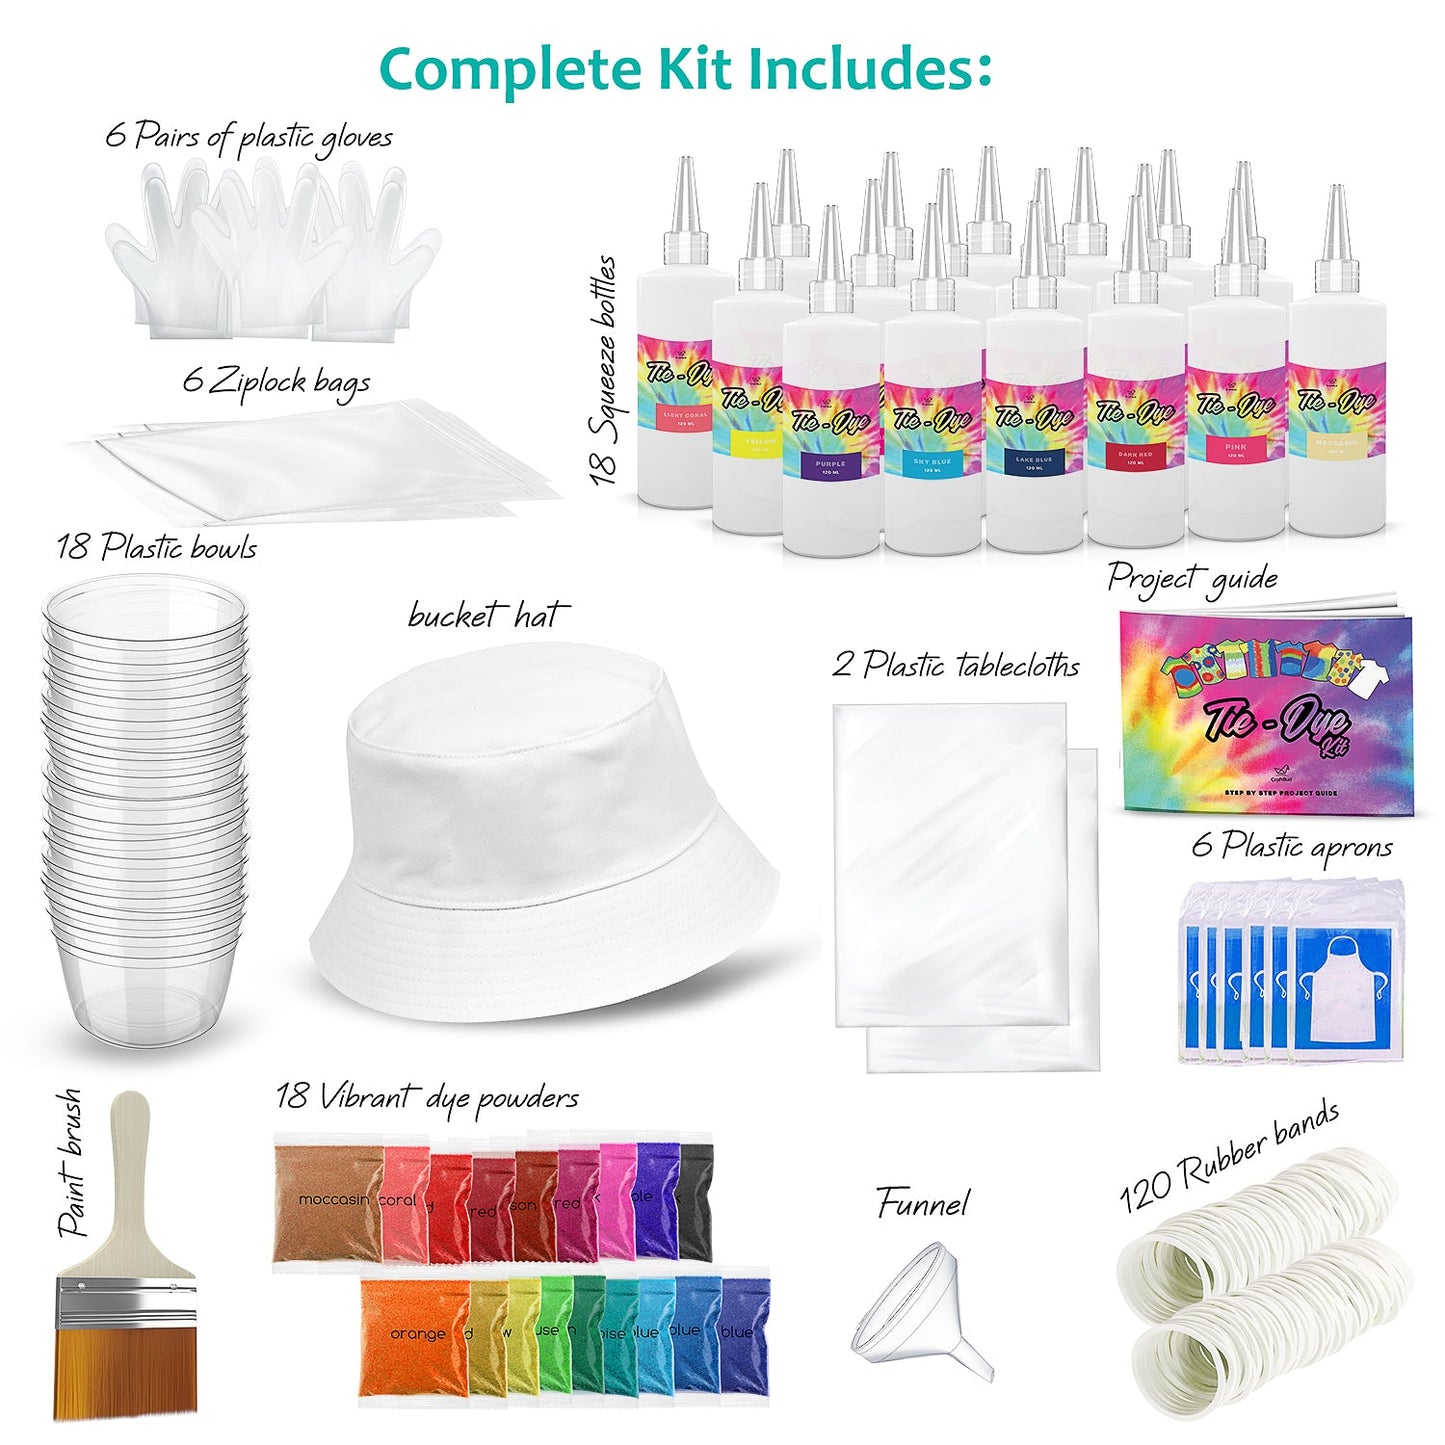 Tie Dye Kit for Kids & Adults